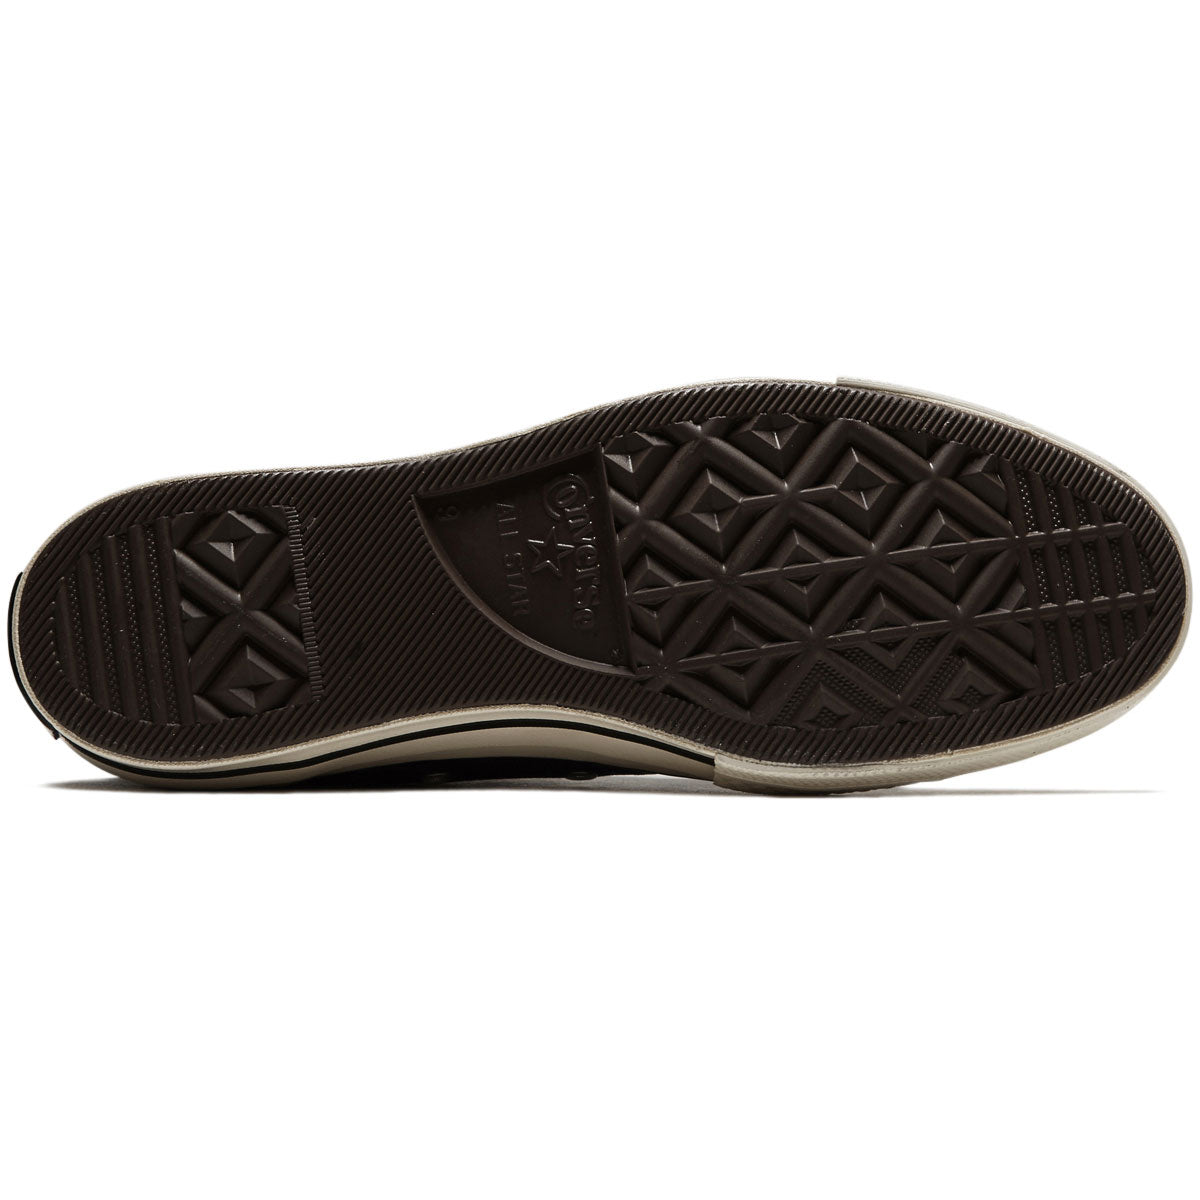 Converse Chuck 70 Hi Shoes - Uncharted Waters/Egret/Black image 4